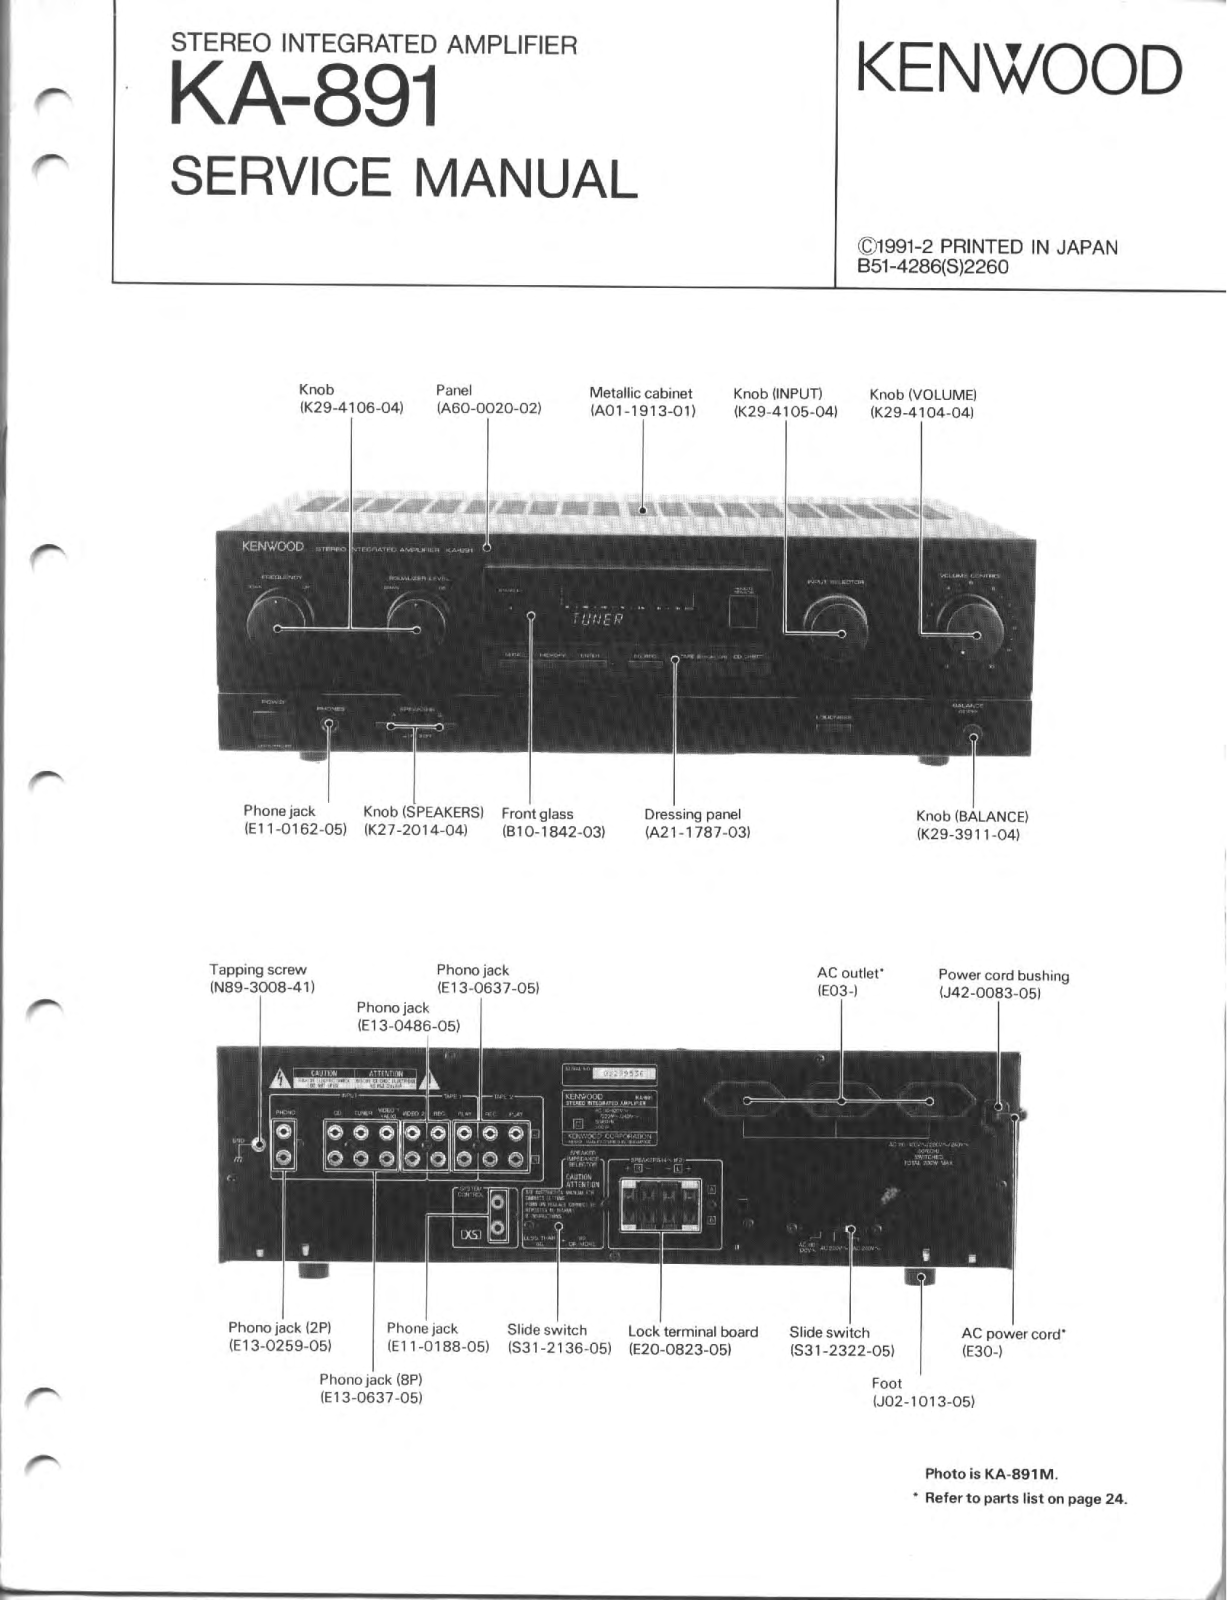 Kenwood KA-891 Service manual